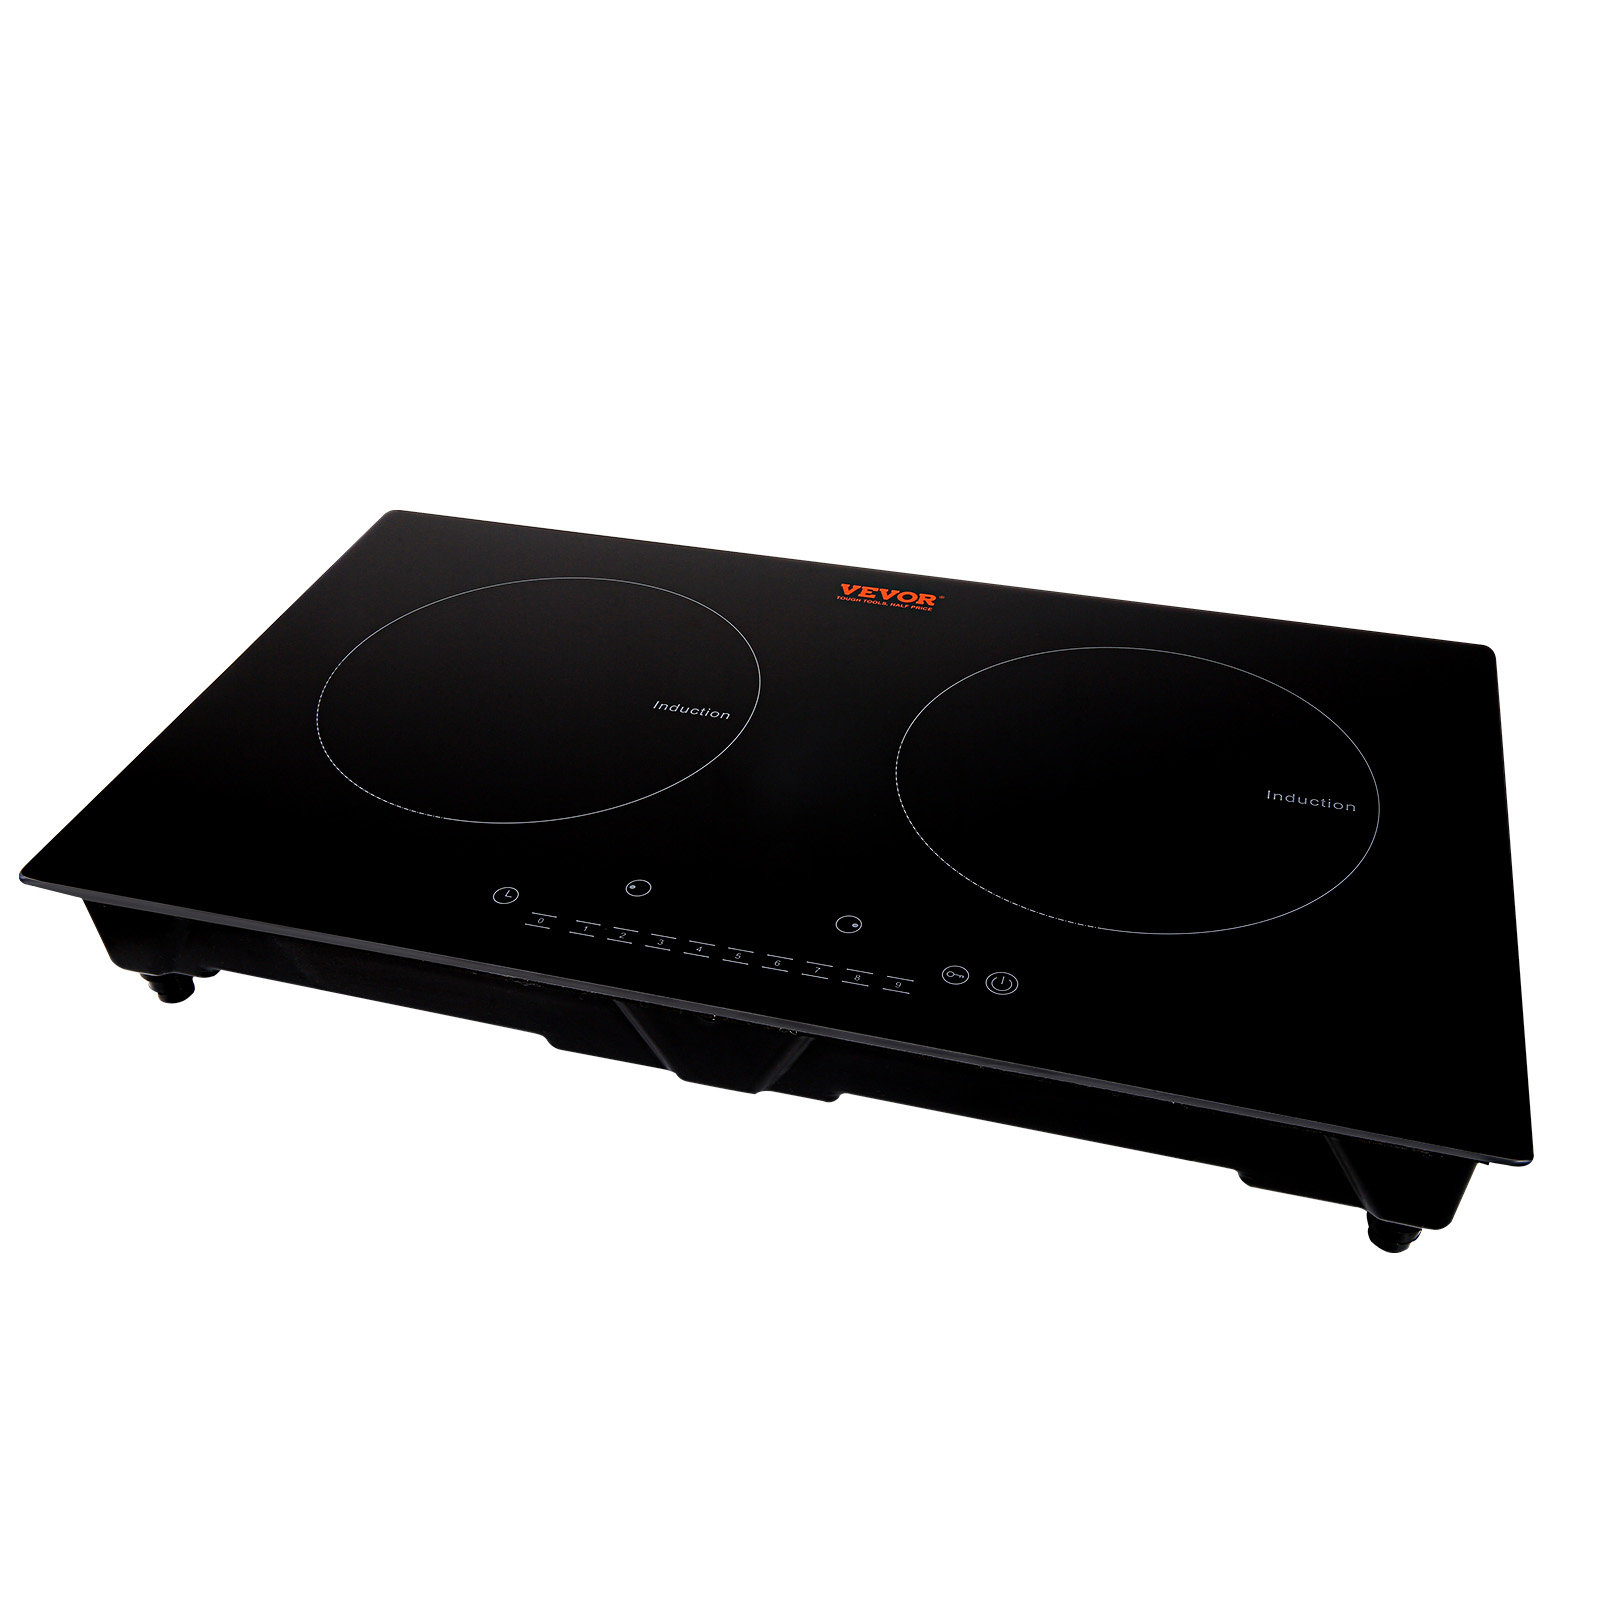 GTKZW Dual Burner Electric Cooktop Review - Modern, Sleek Design and Very  Functional! 